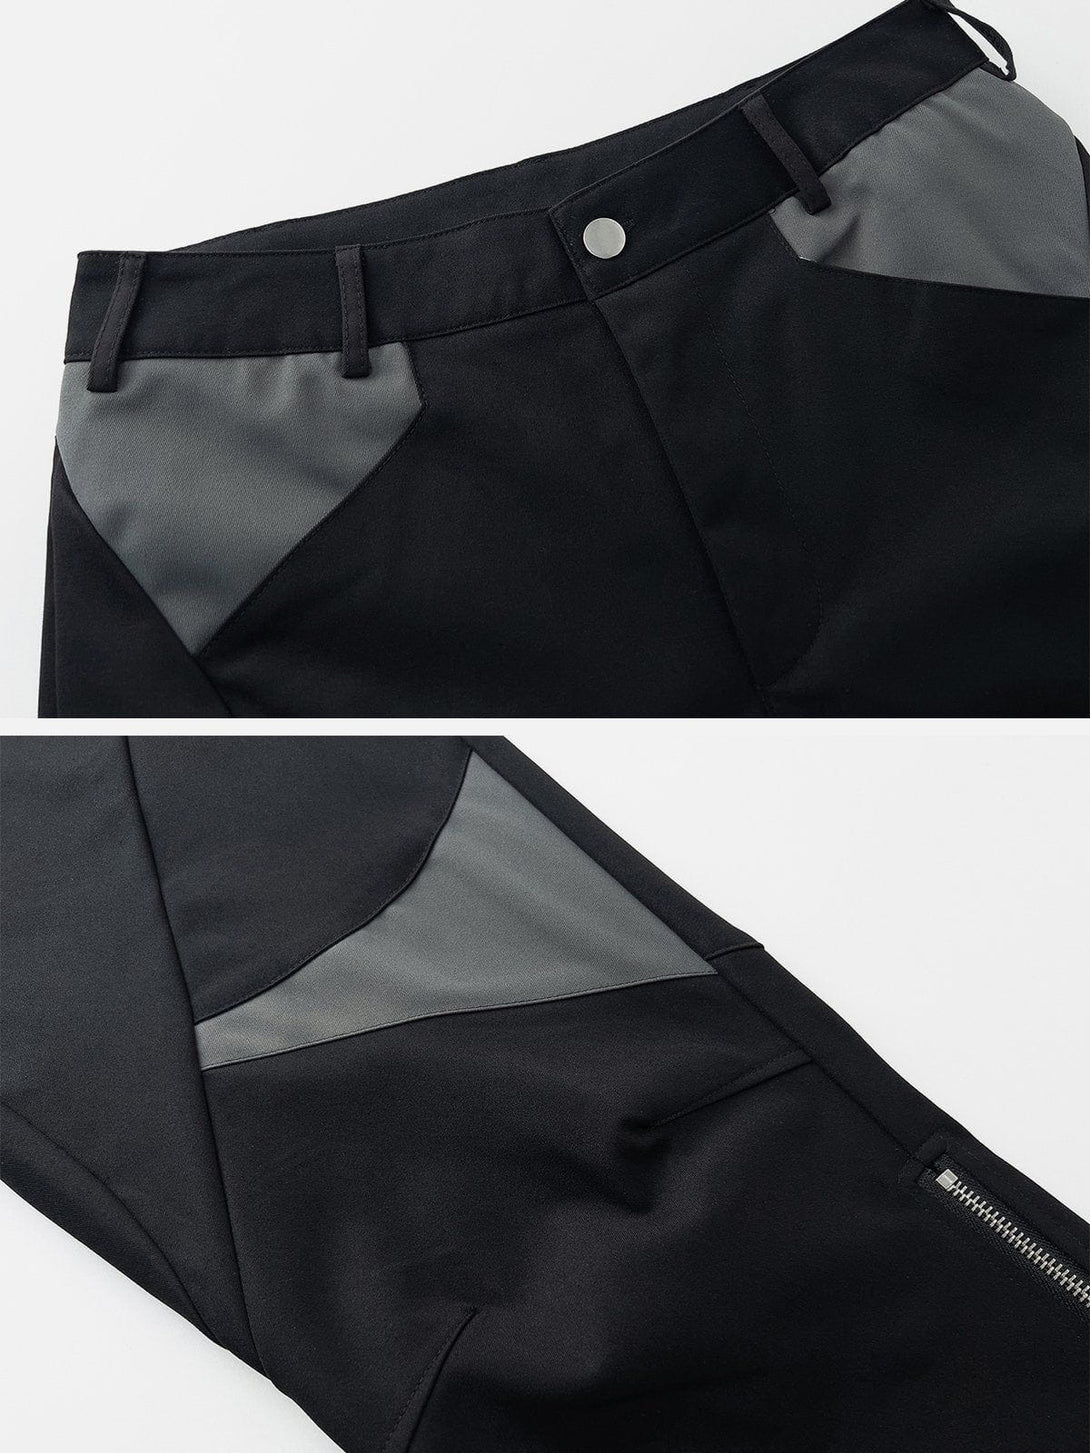 Levefly - Vintage Patchwork Pants - Streetwear Fashion - levefly.com